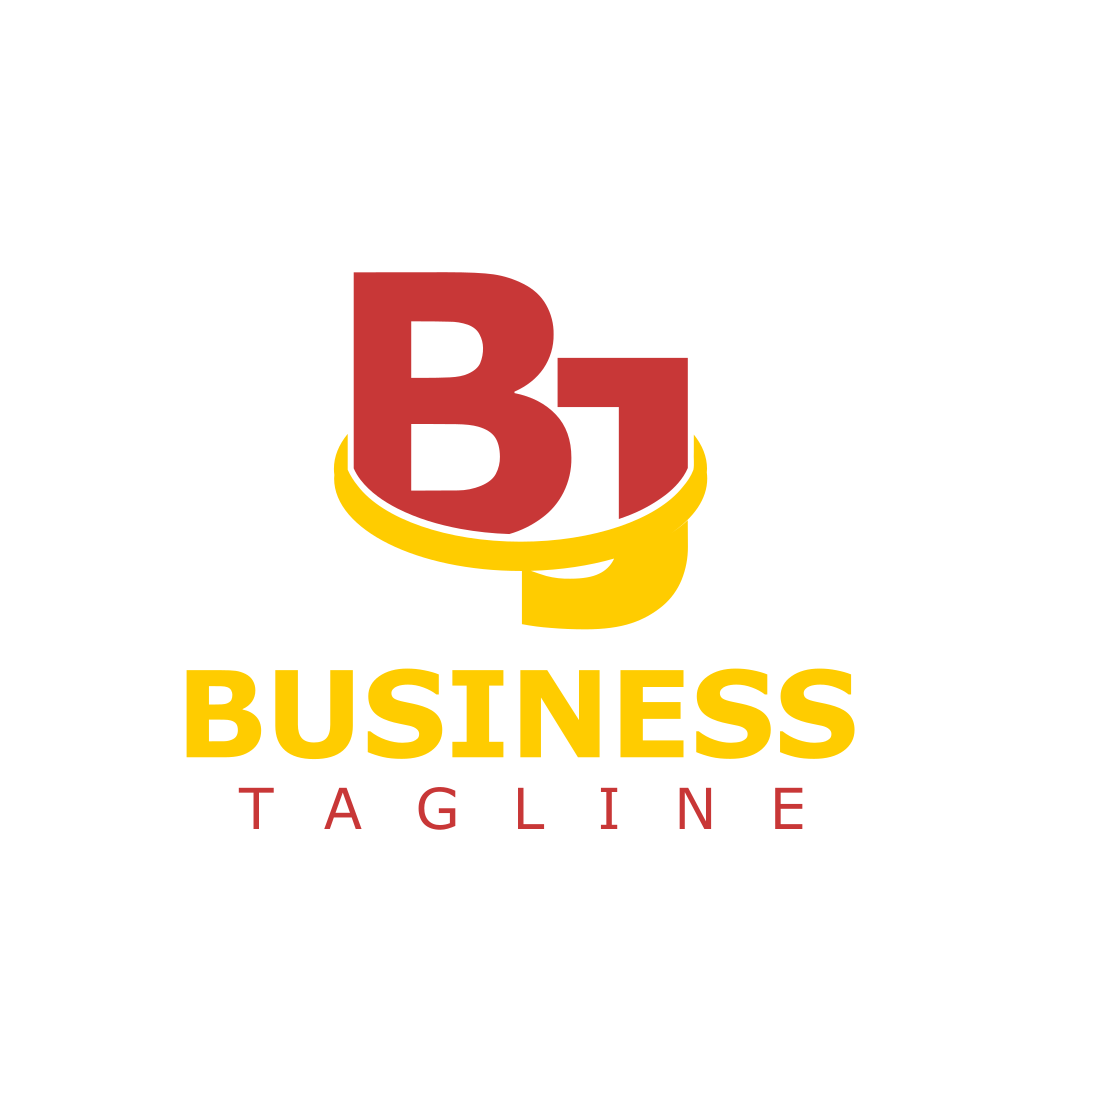 B.J Letter Initials Logo Design Template cover image.